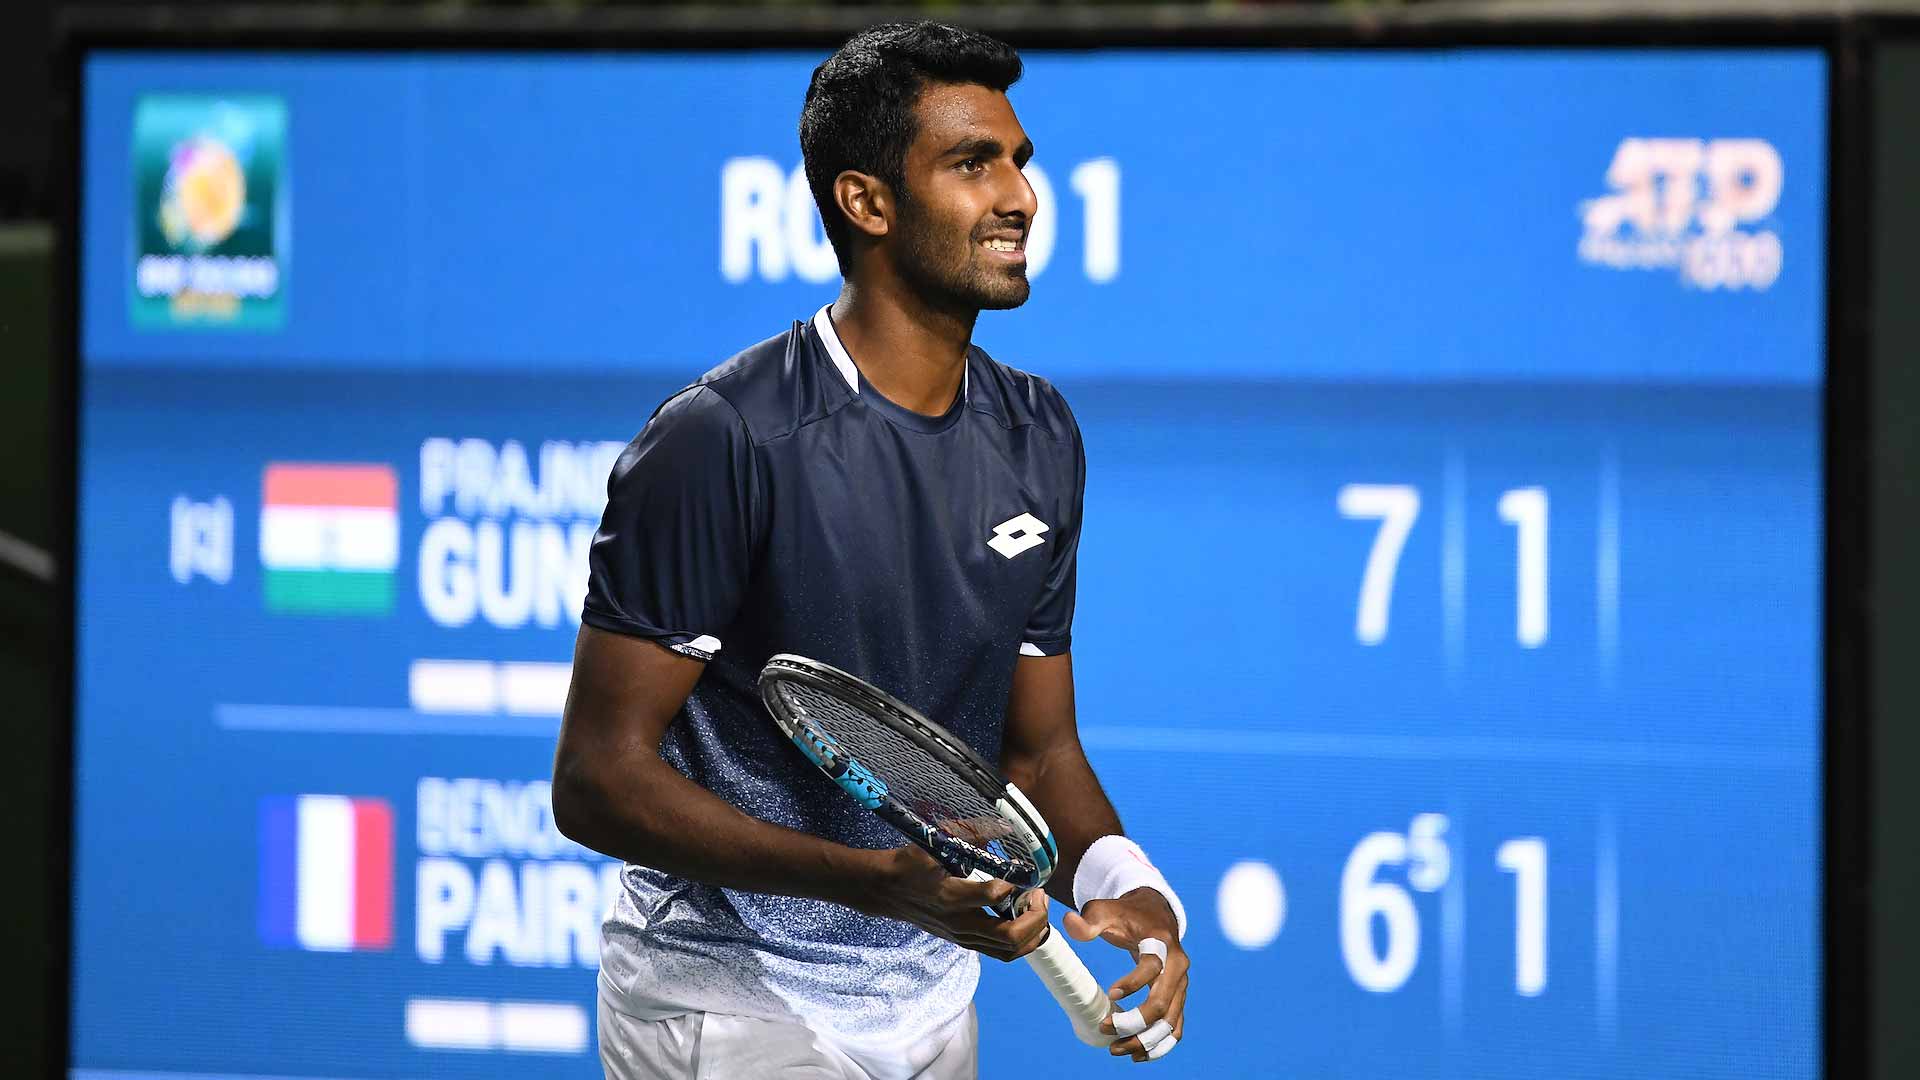  <a href='https://www.atptour.com/en/players/prajnesh-gunneswaran/ga94/overview'>Prajnesh Gunneswaran</a>, India's No. 1 player, wins his first ATP Masters 1000 main draw match at the <a href='https://www.atptour.com/en/tournaments/indian-wells/404/overview'>BNP Paribas Open</a> in Indian Wells.